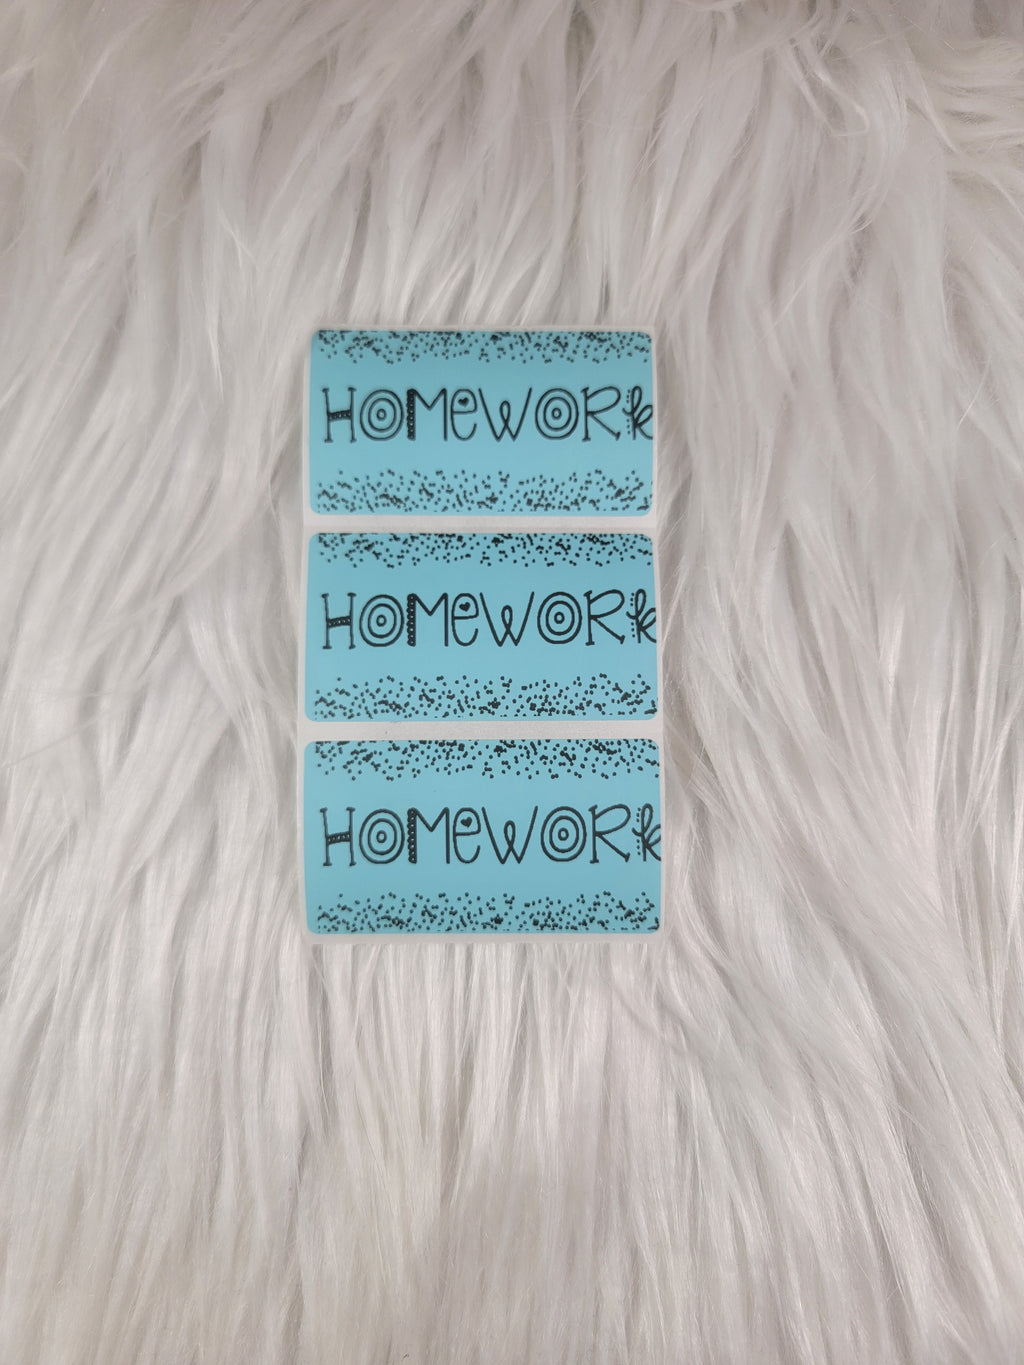 Homework stickers